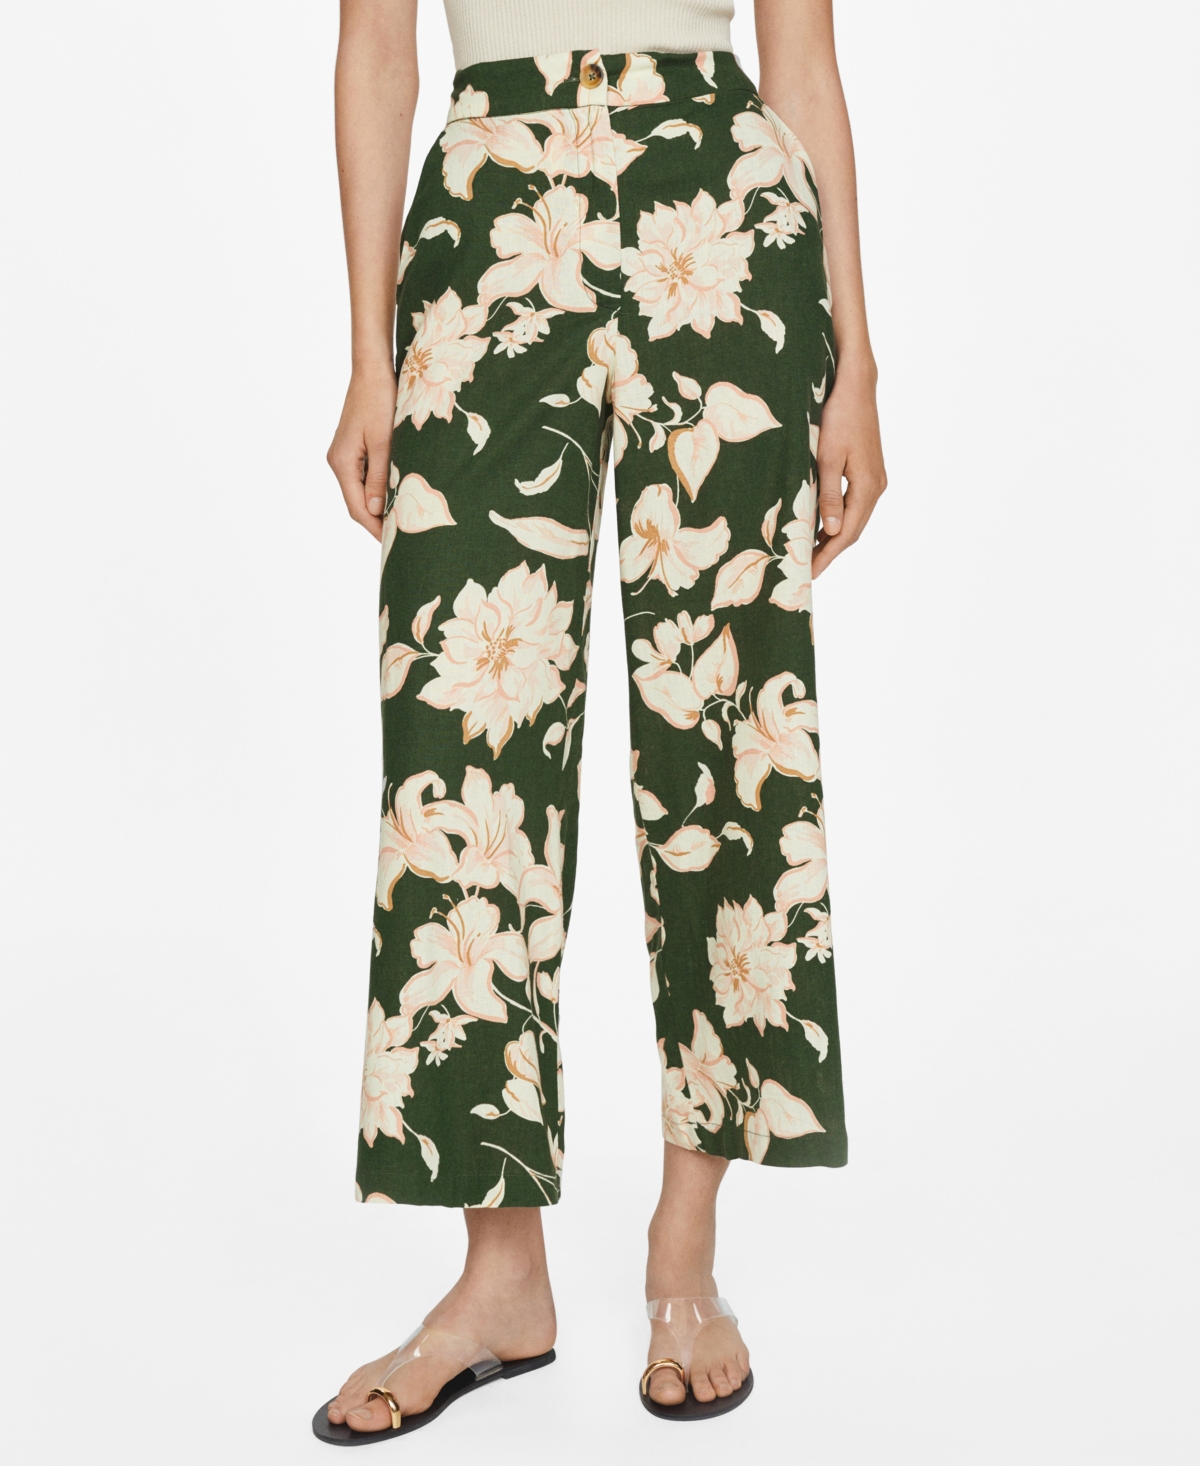 Women's Flower Print Pants - Green